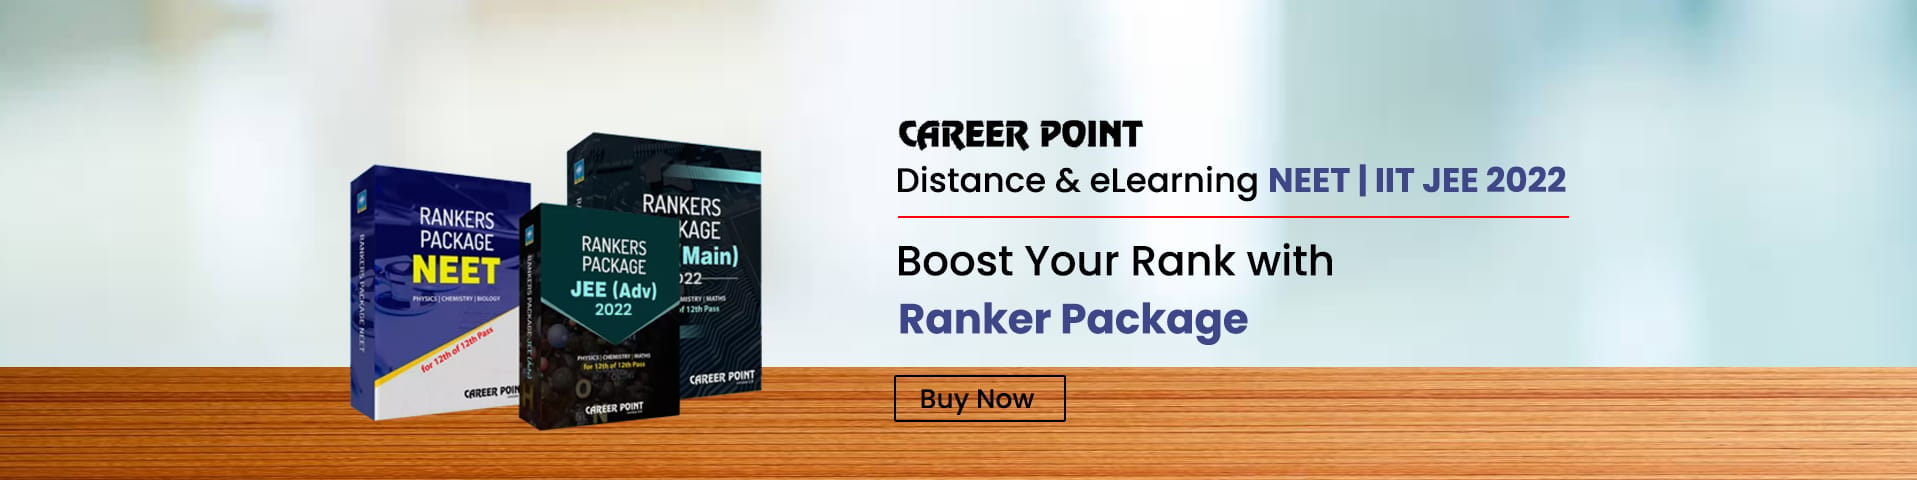 DLP Career Point Ranker Package 2022